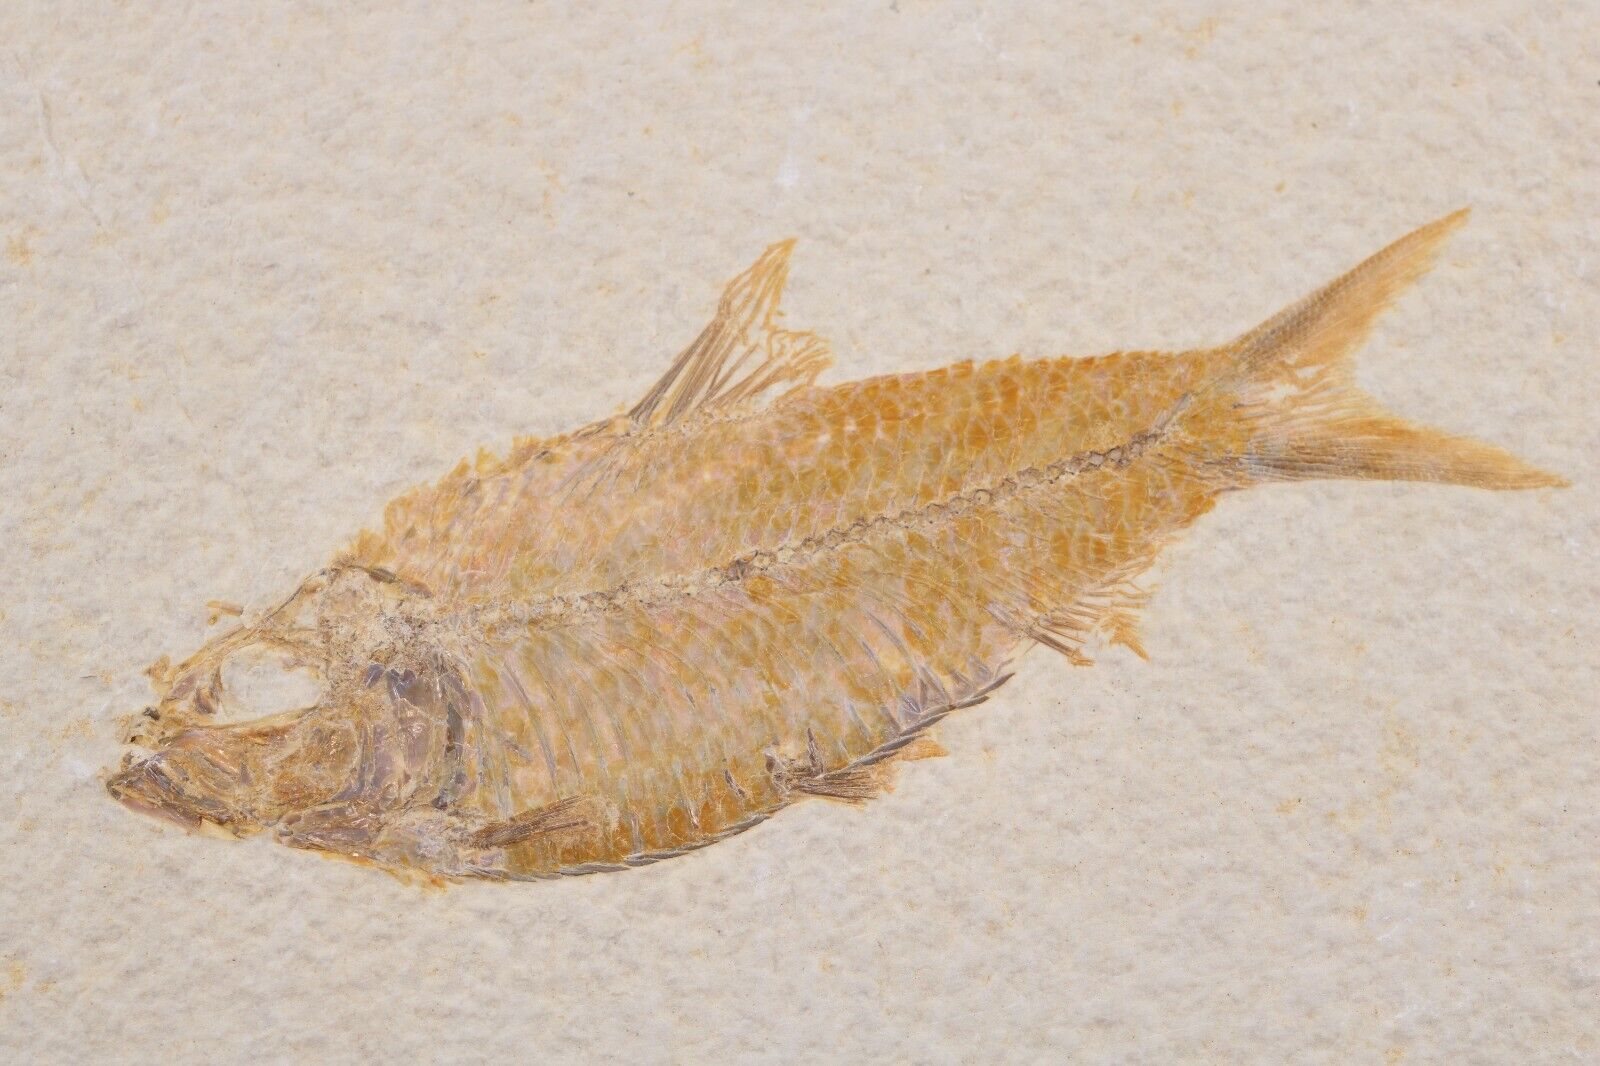 Knightia eocaena Fossil Fish Fossil Lake Green River Fm Wyoming COA 11630